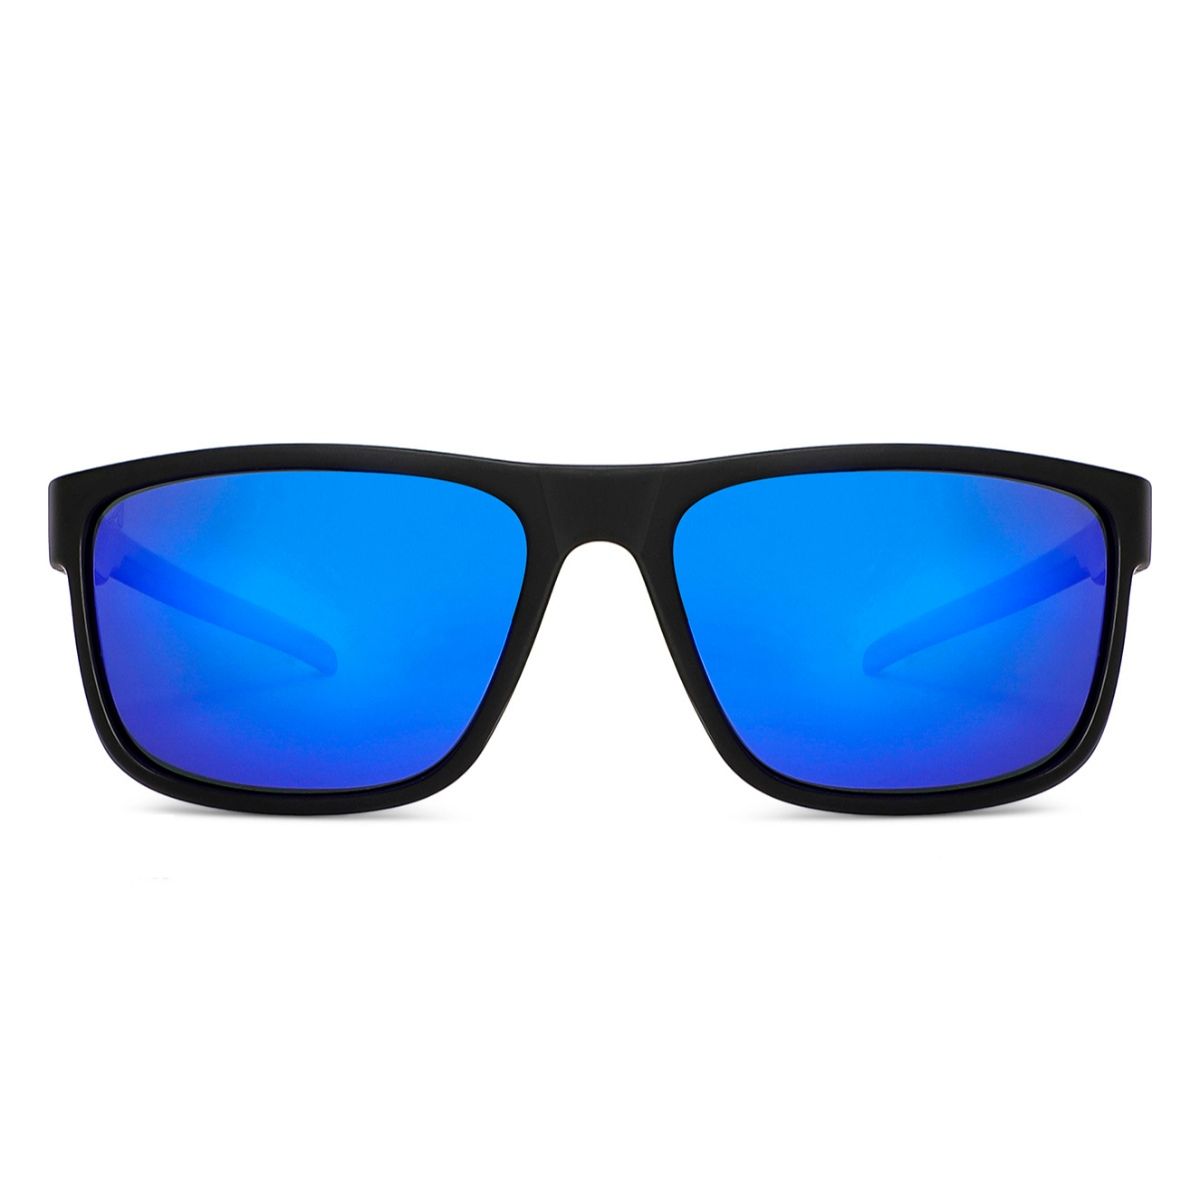 Buy Black Sunglasses for Men by Lenskart Boost Online | Ajio.com